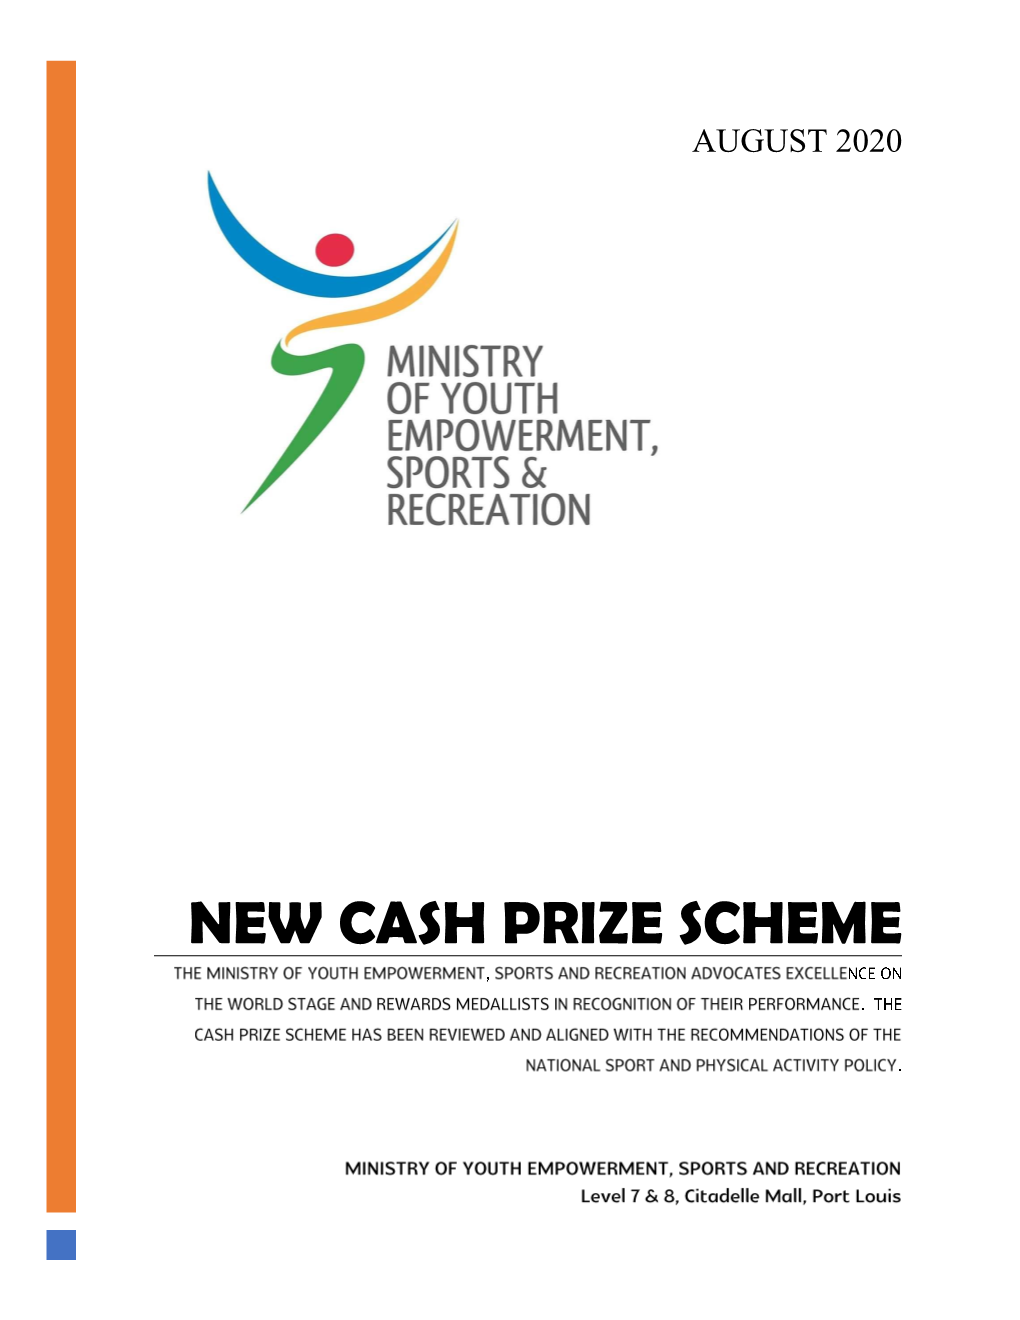 New Cash Prize Scheme